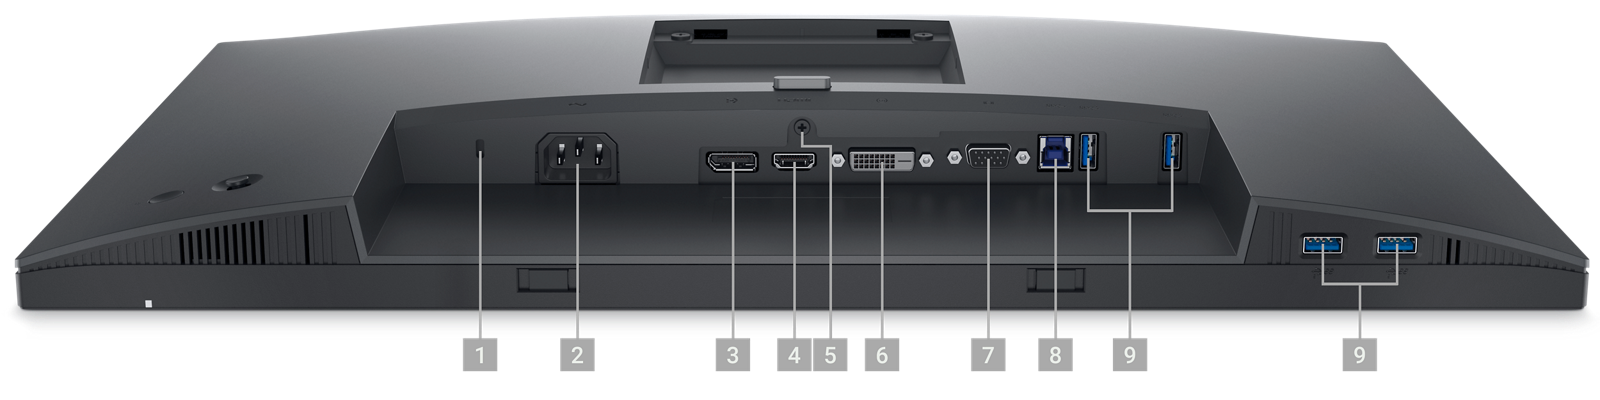 Dell P2423 顯示器的圖片，螢幕朝下，數字 1 到 9 顯示了本產品可用的連接埠 (於下方)。